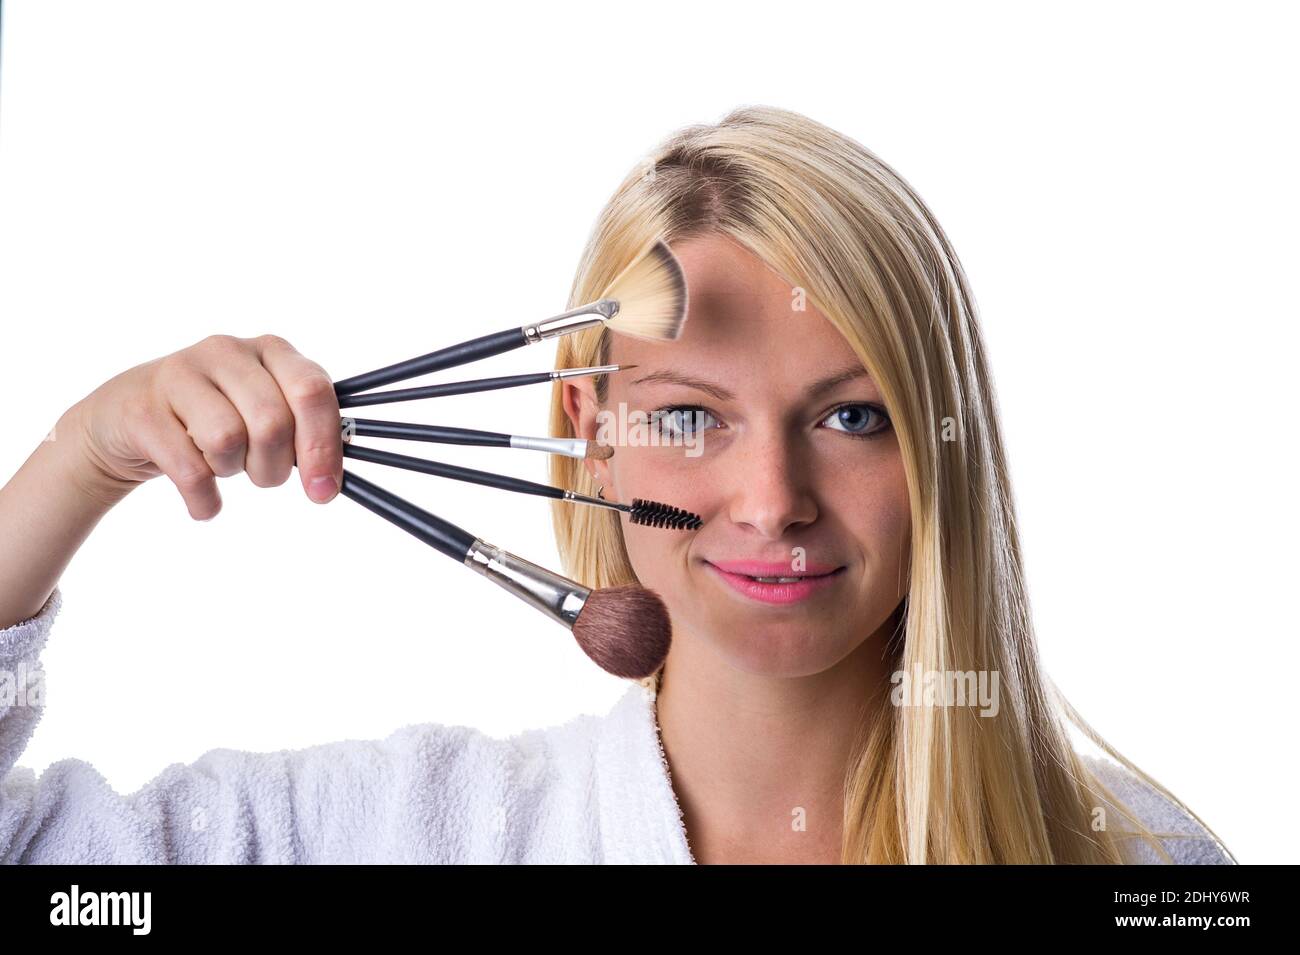 Blonde Frau mit Make up Pinsel, Kosmetikpinsel, Model Release, Stock Photo